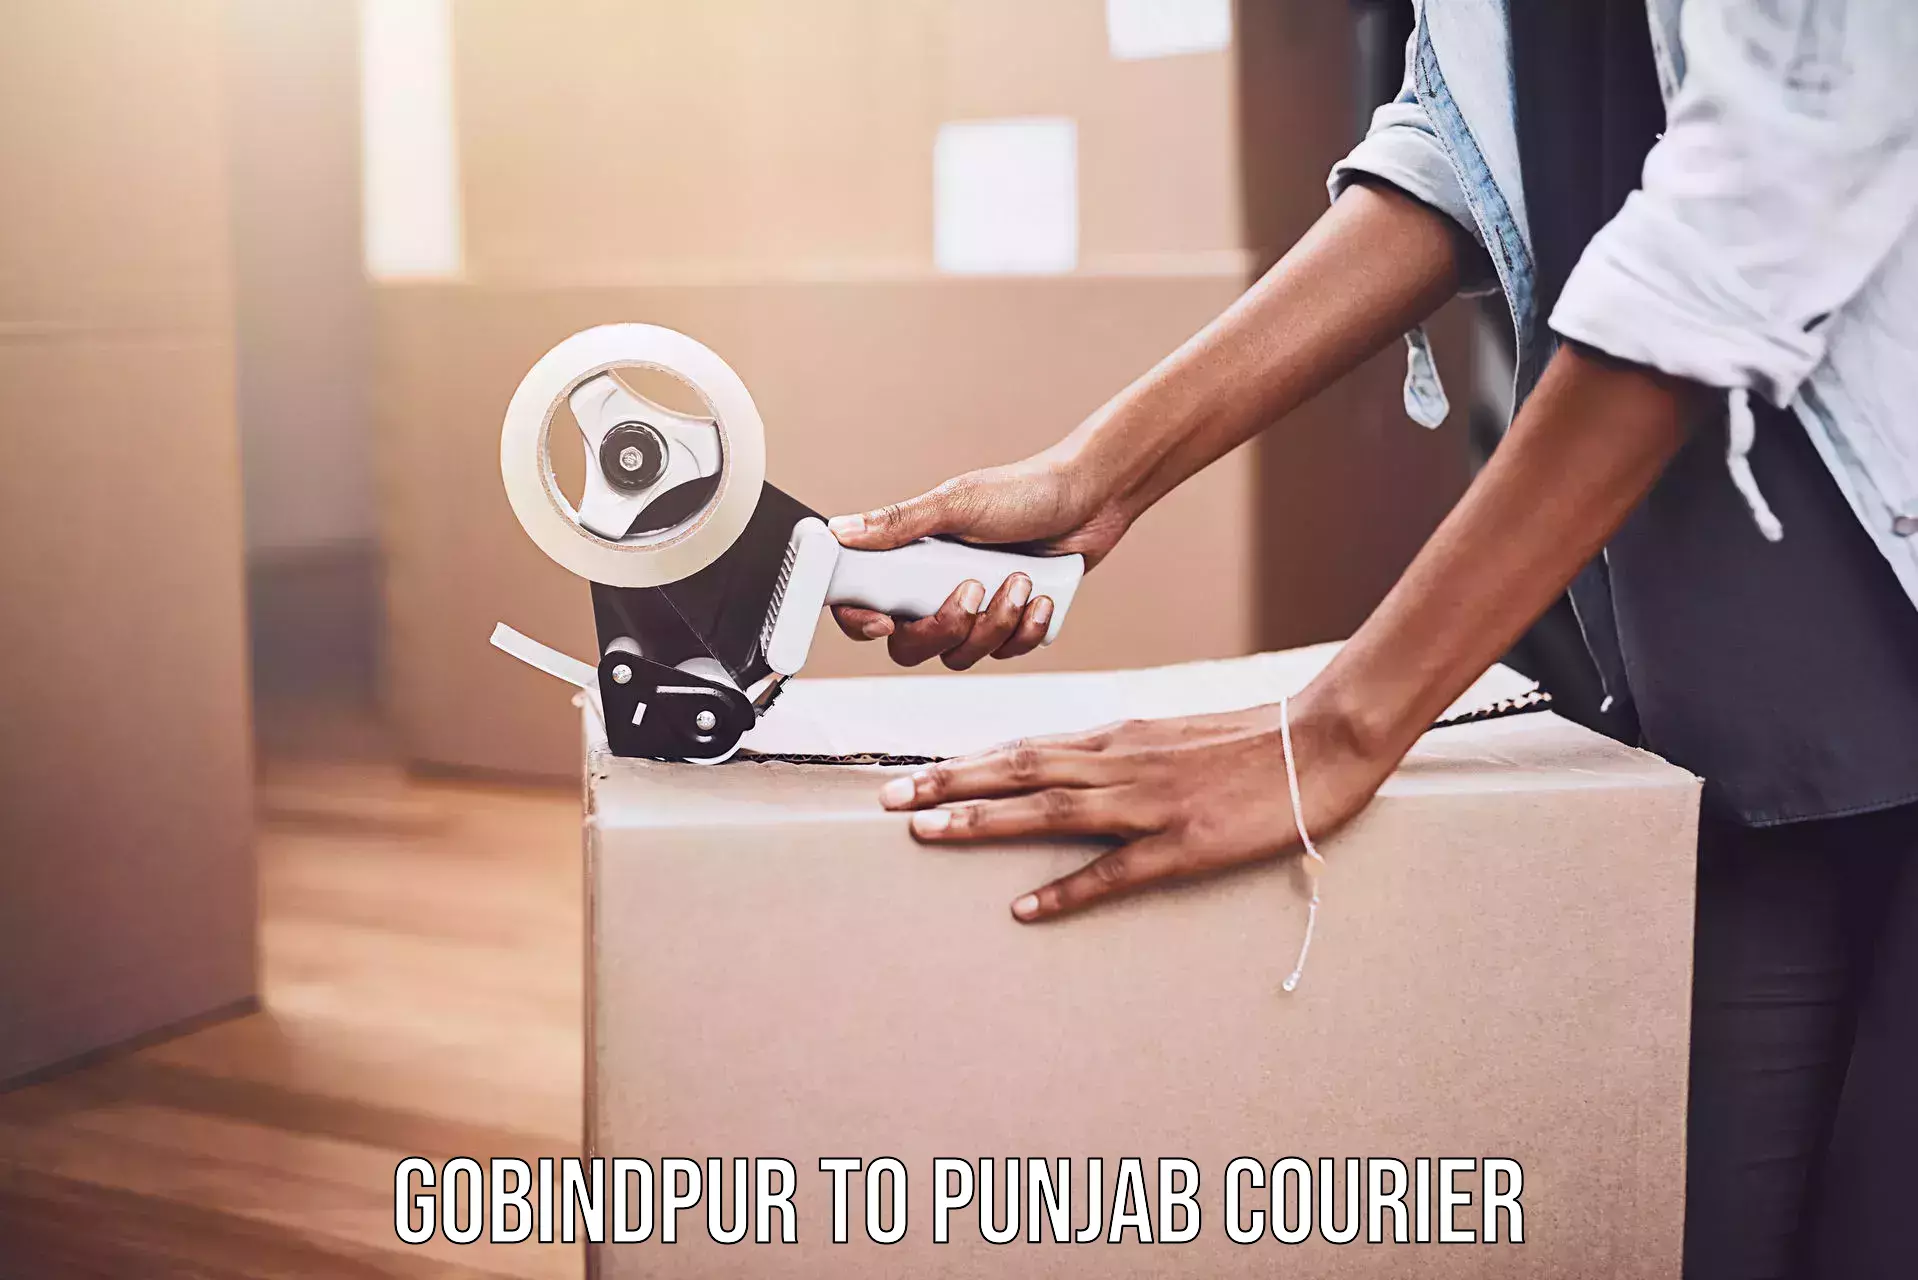 Reliable delivery network Gobindpur to Jalandhar